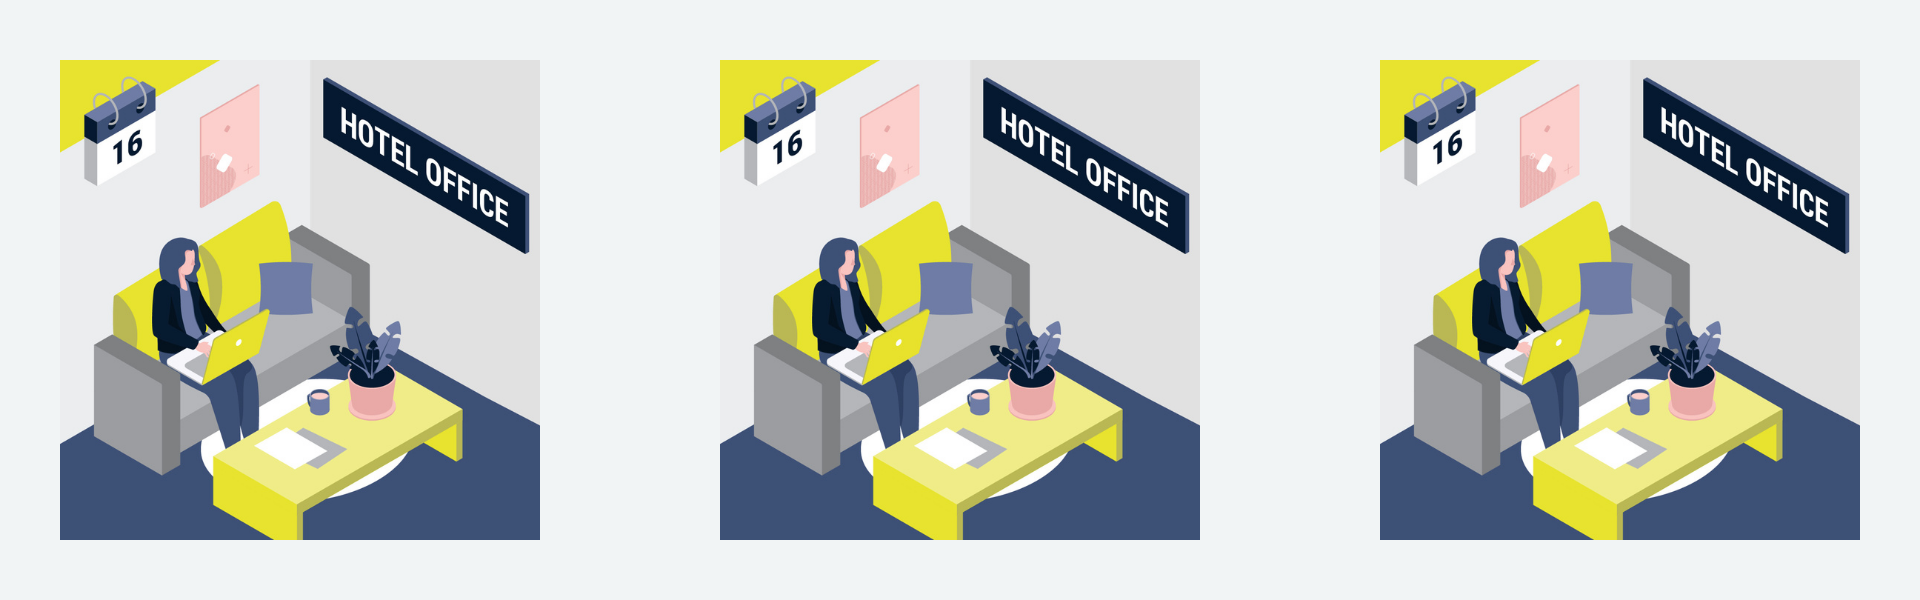 hotel-office-tendance-2022